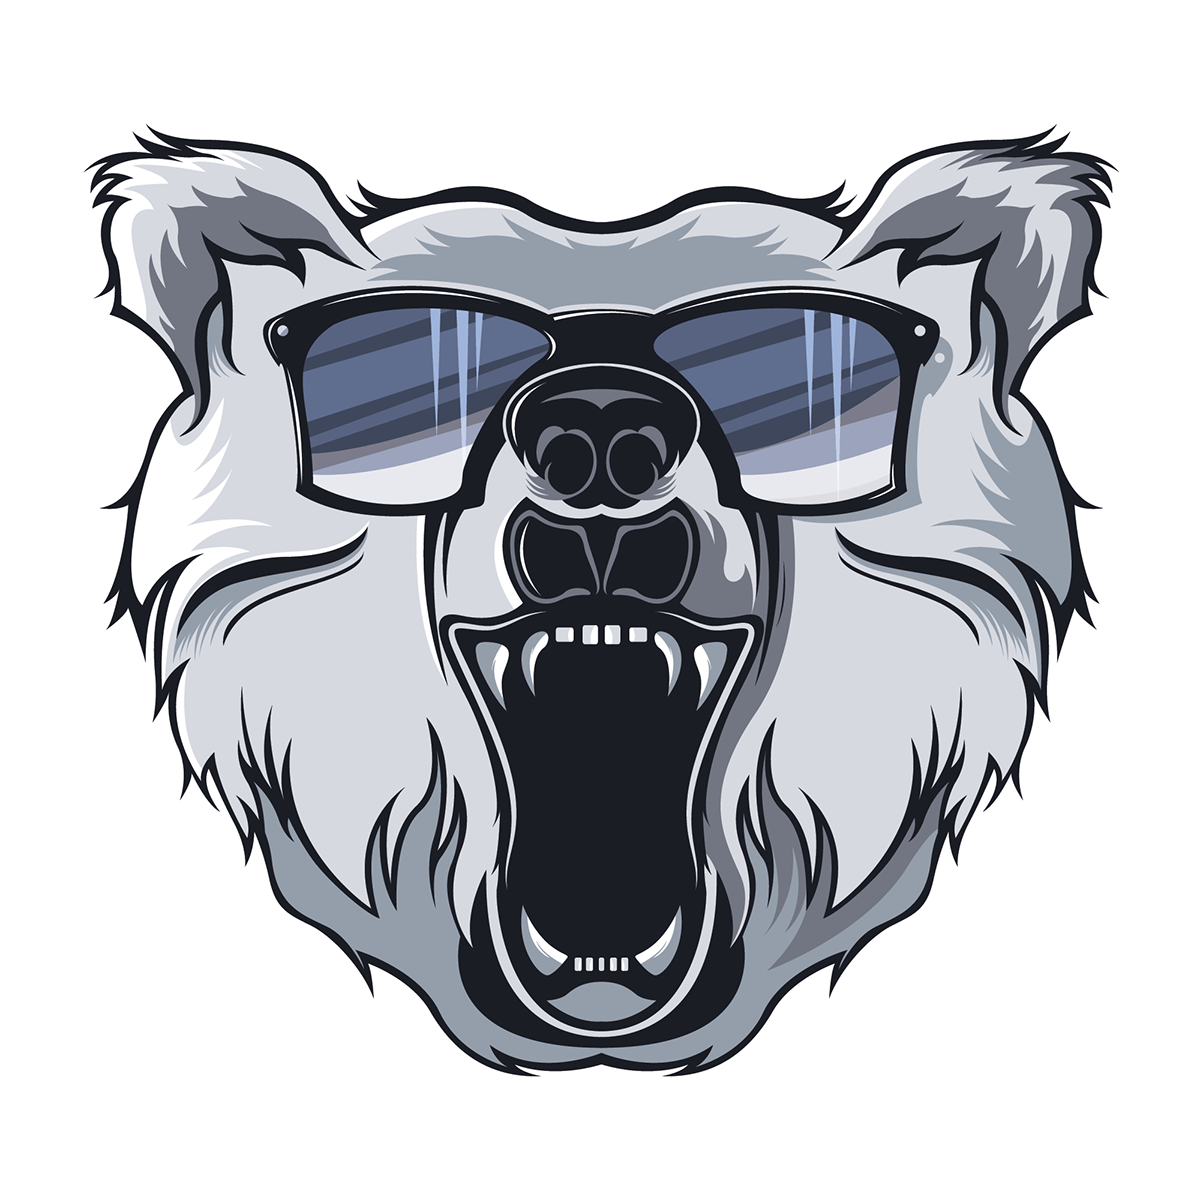 Bear Logo - Bear Logo Illustration on Student Show